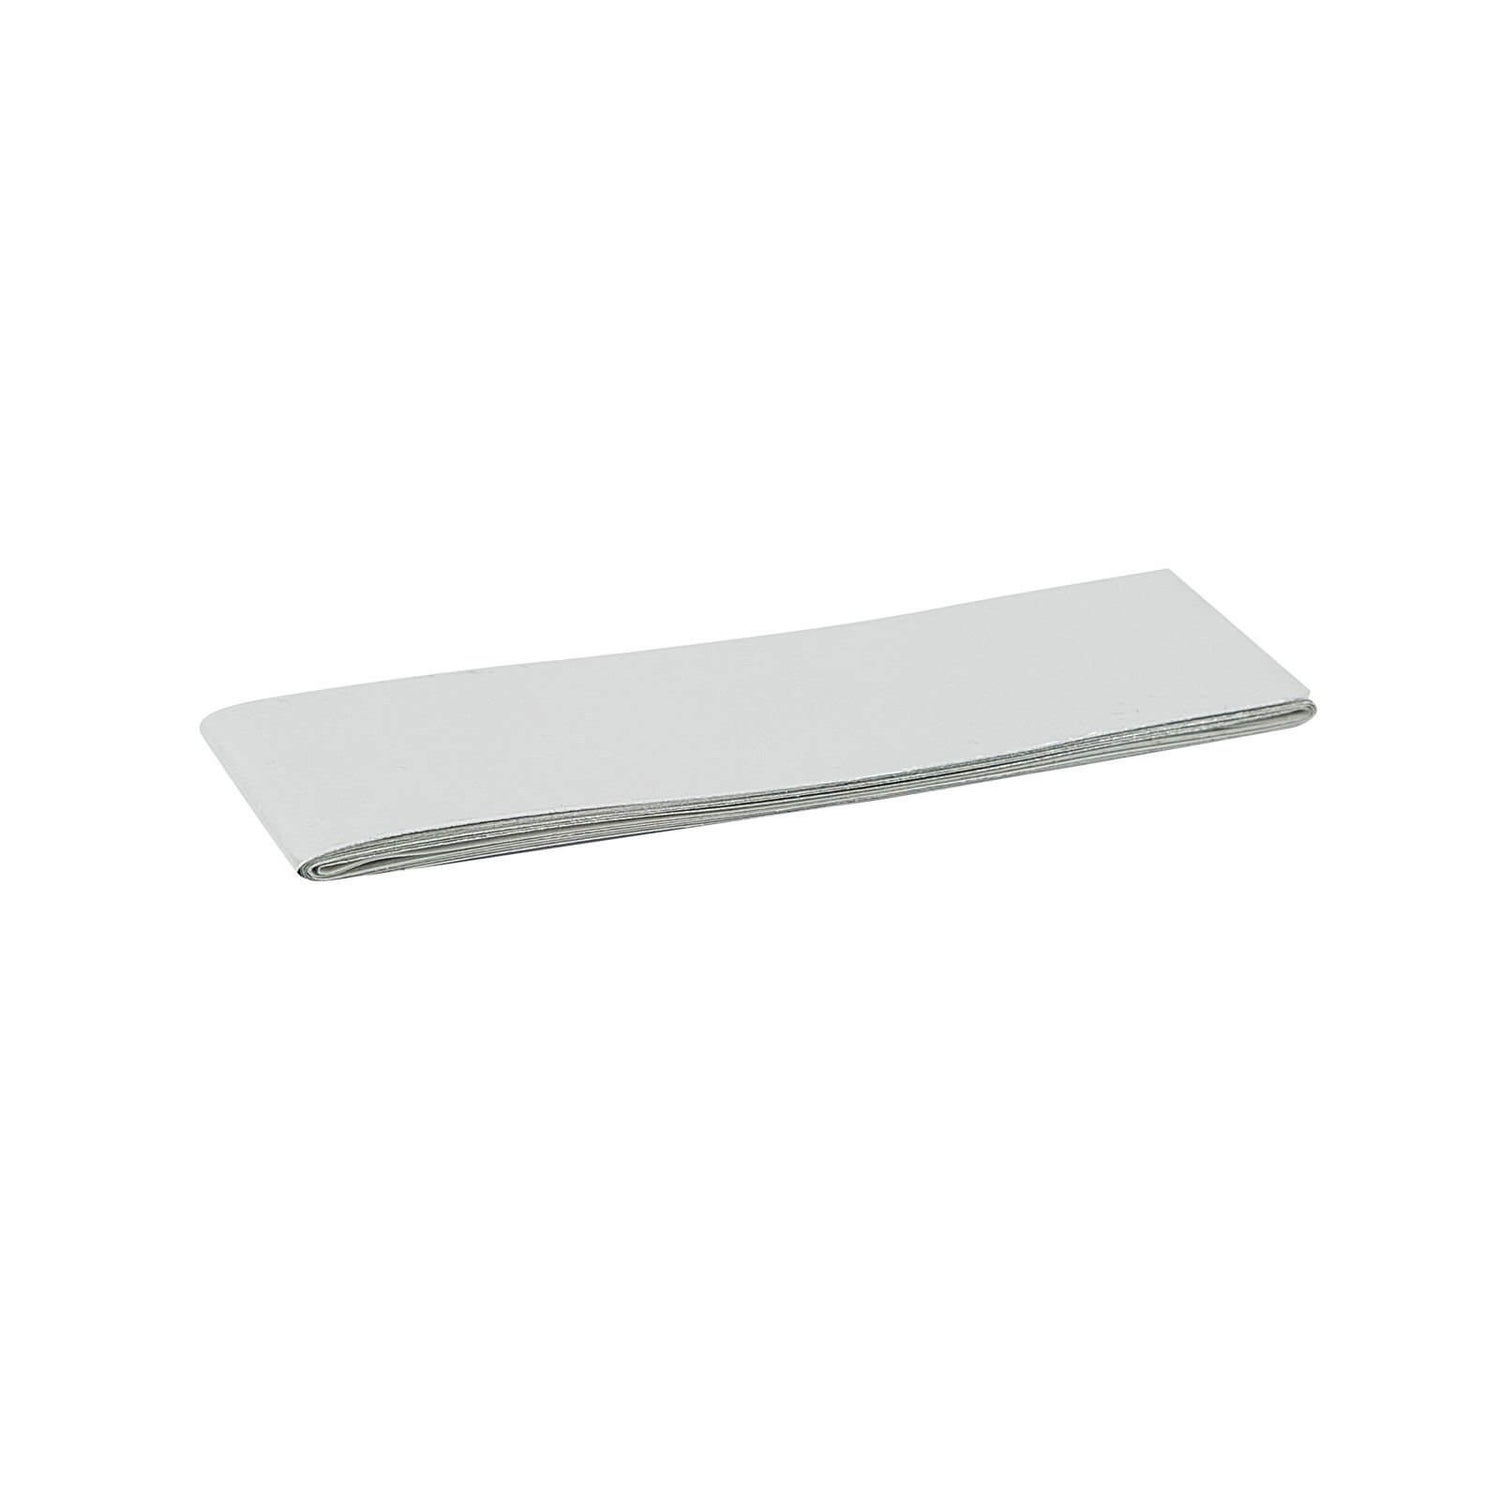 Unika Worktop Heat Reflective Aluminium Tape